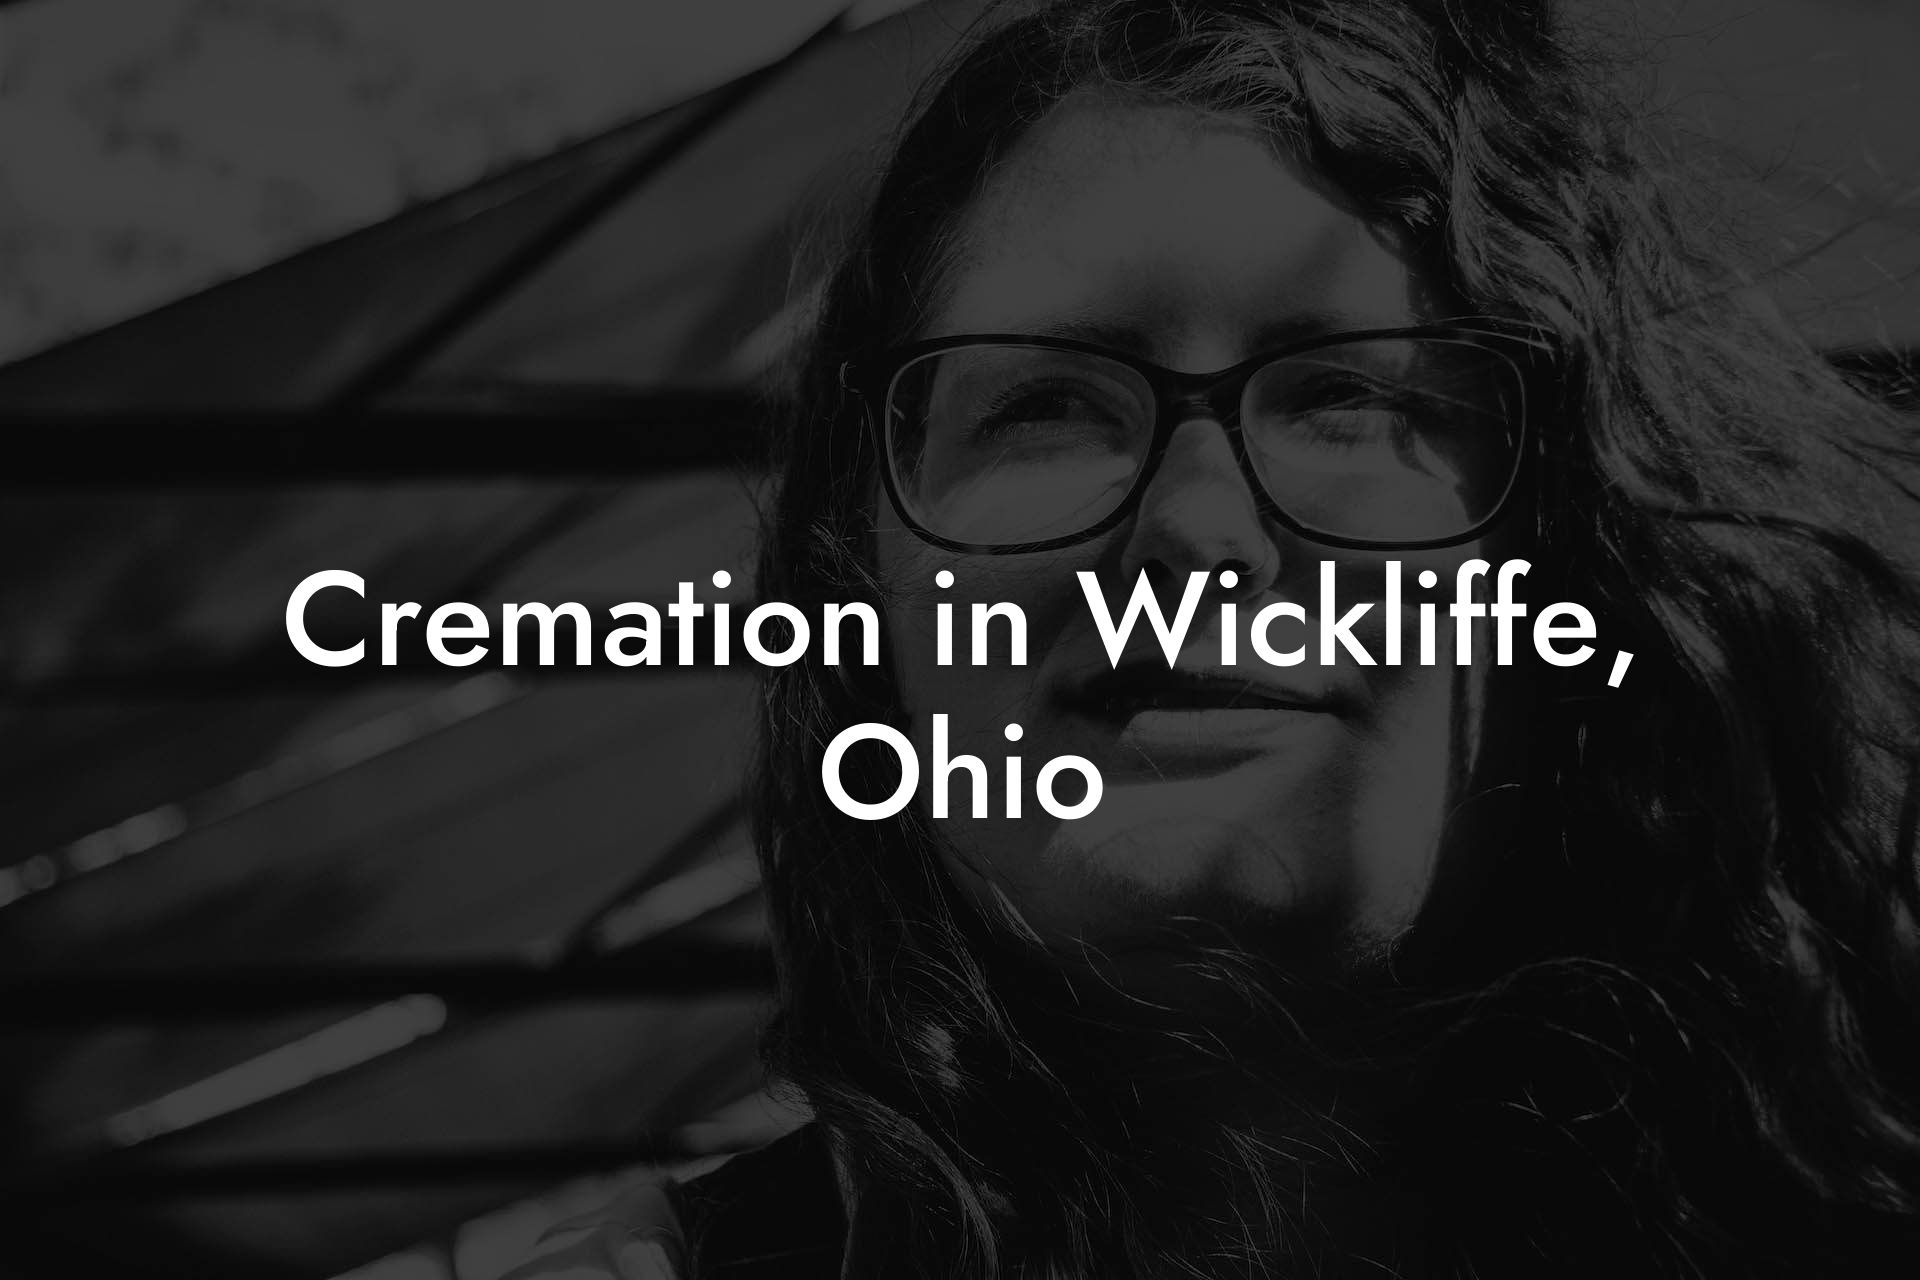 Cremation in Wickliffe, Ohio